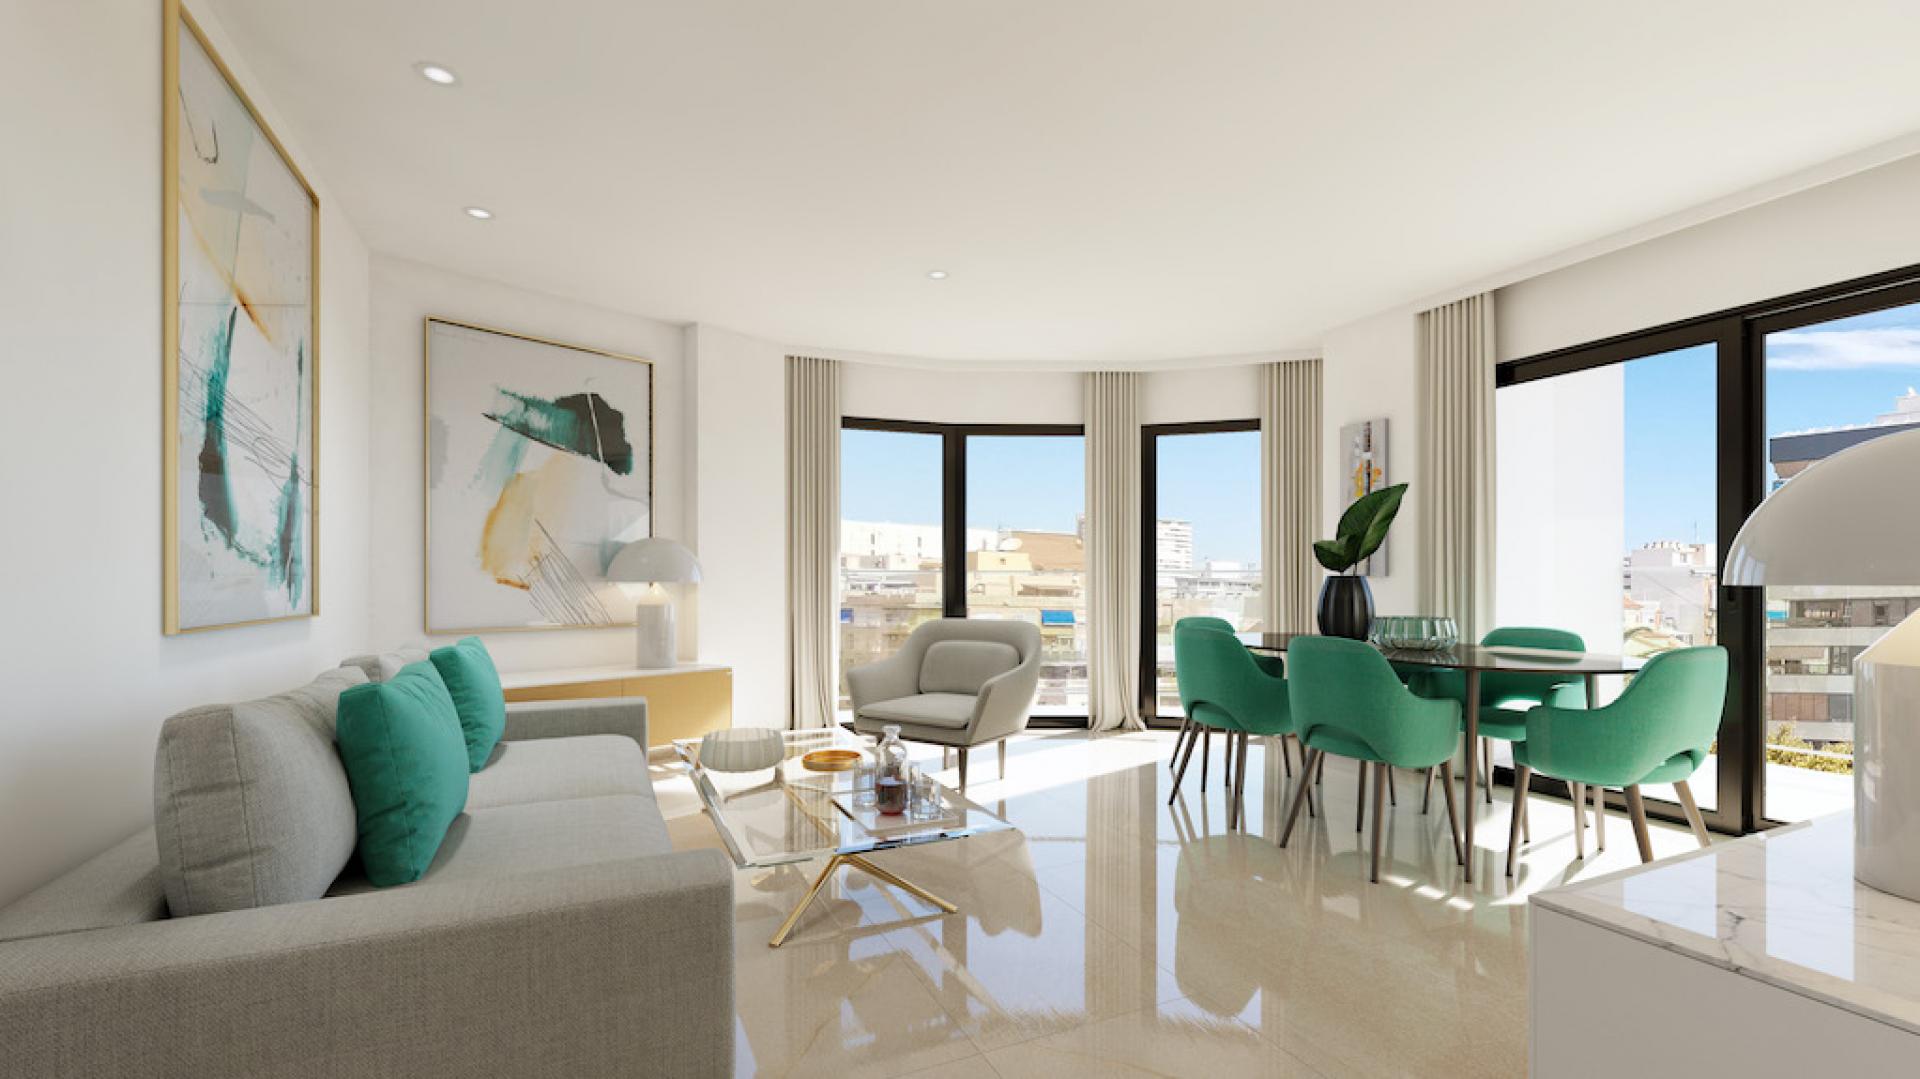 2 sypialnia Mieszkanie z balkonem W Alicante - Nowa konstrukcja in Medvilla Spanje